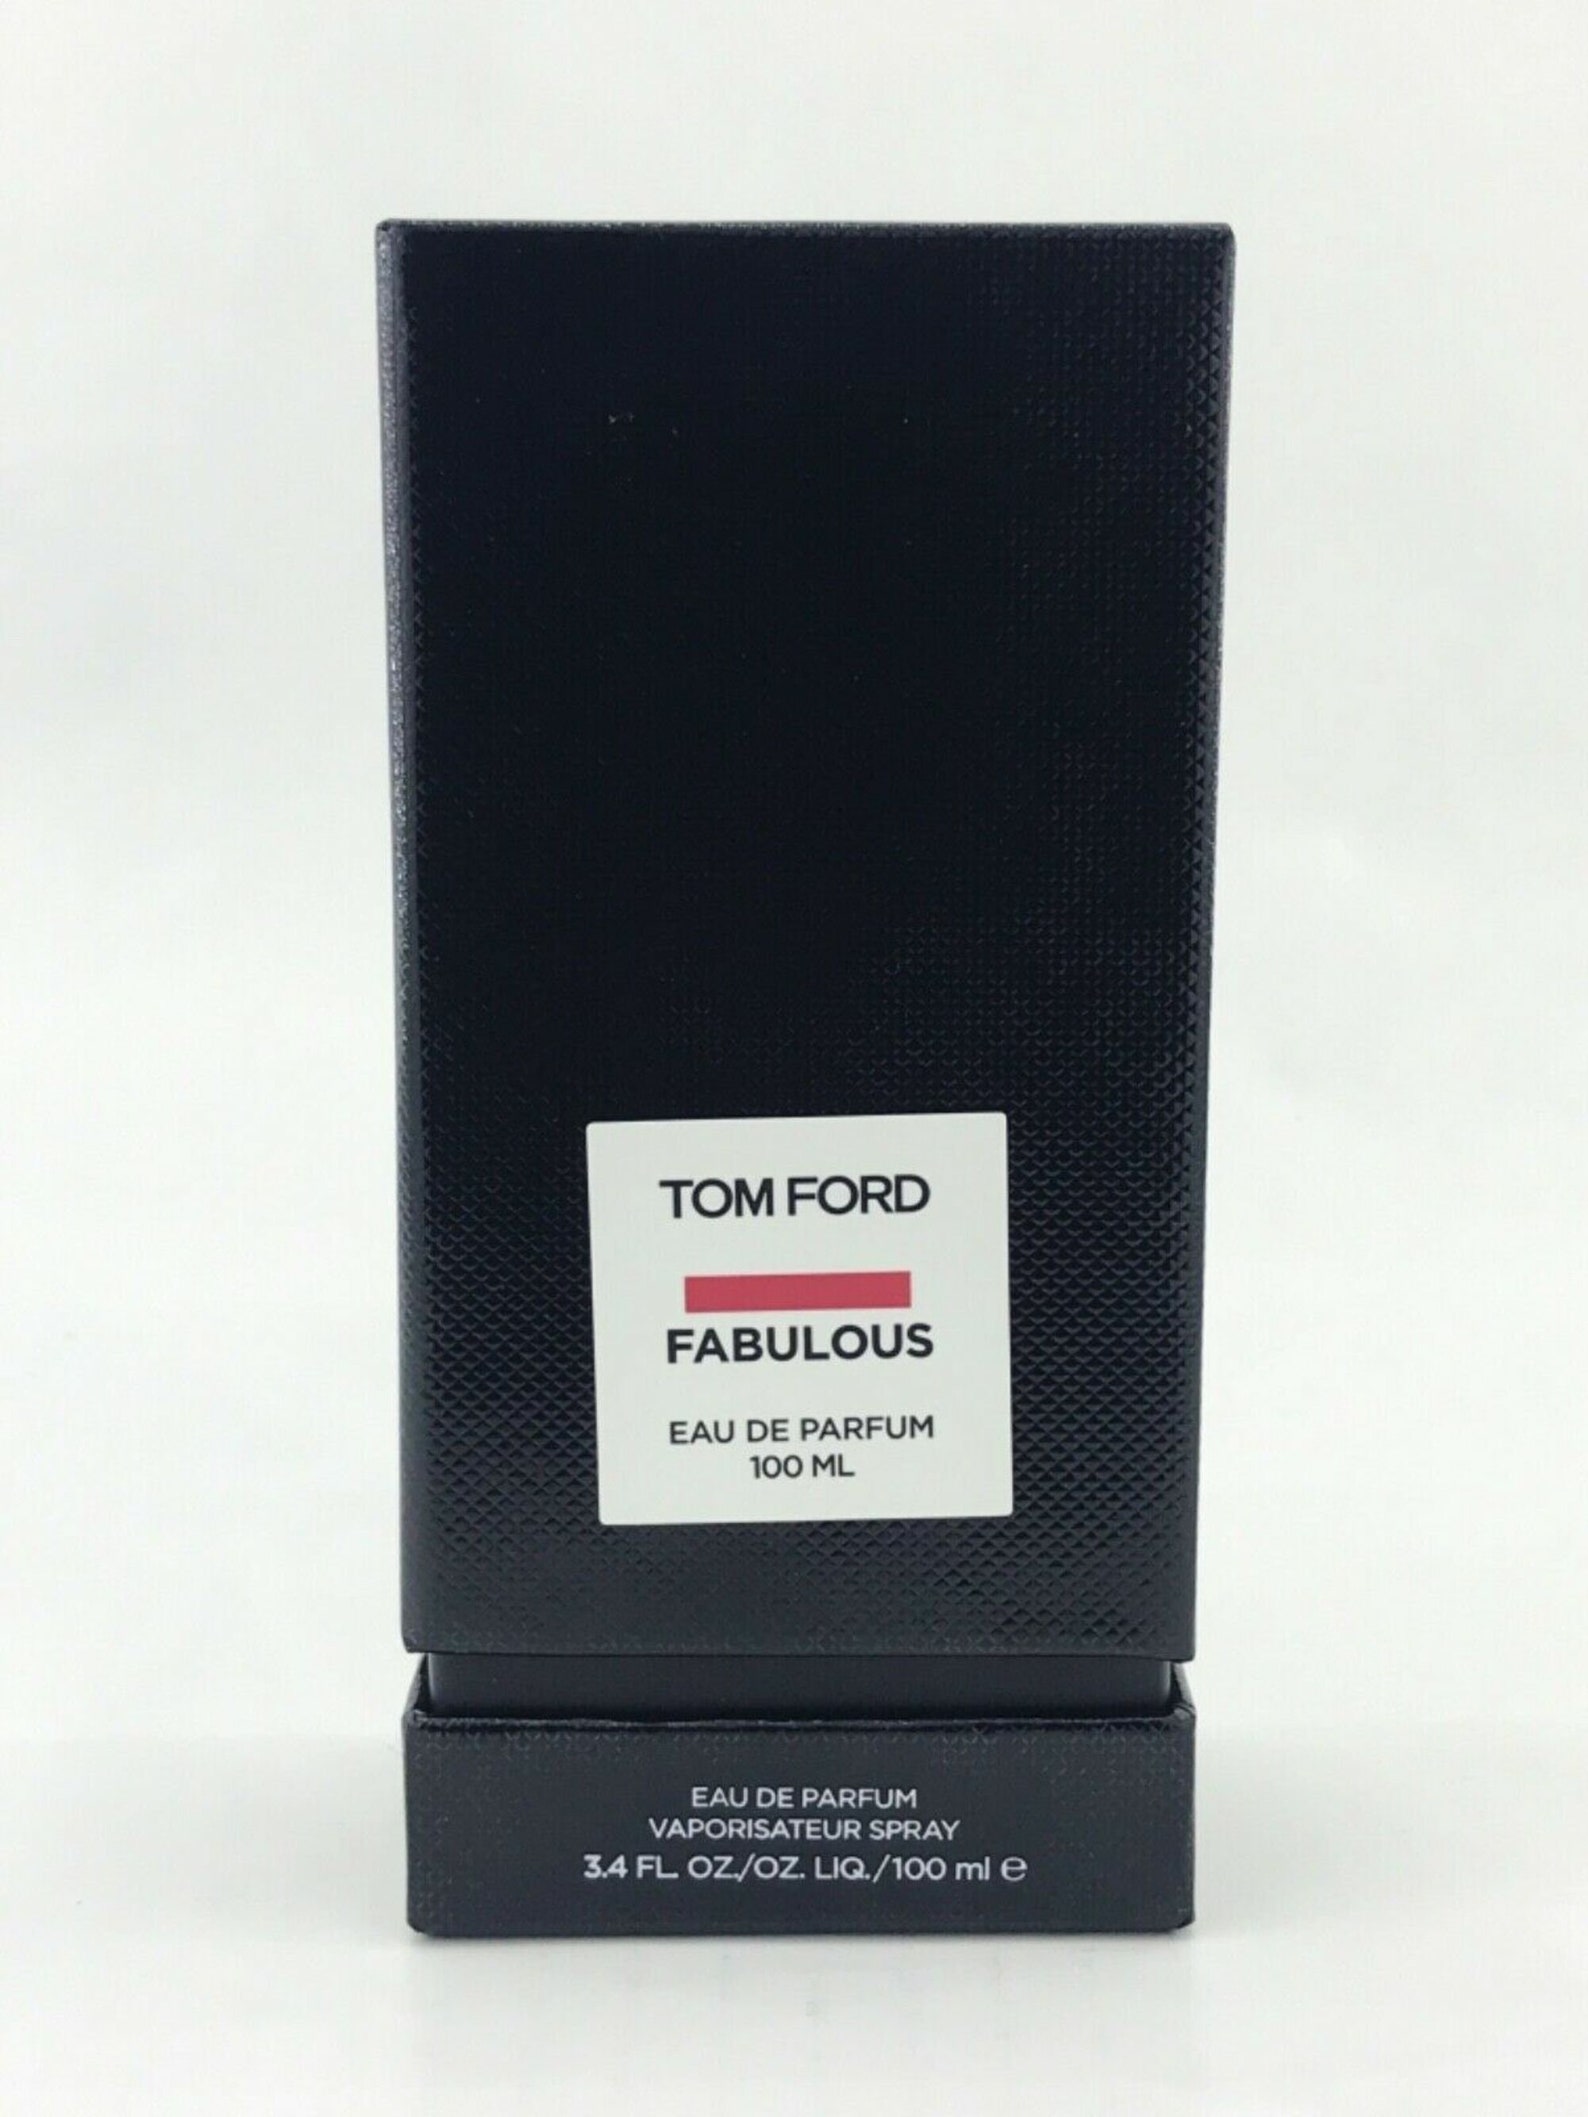 Tom Ford Fabulous 100 ml New sealed | Etsy